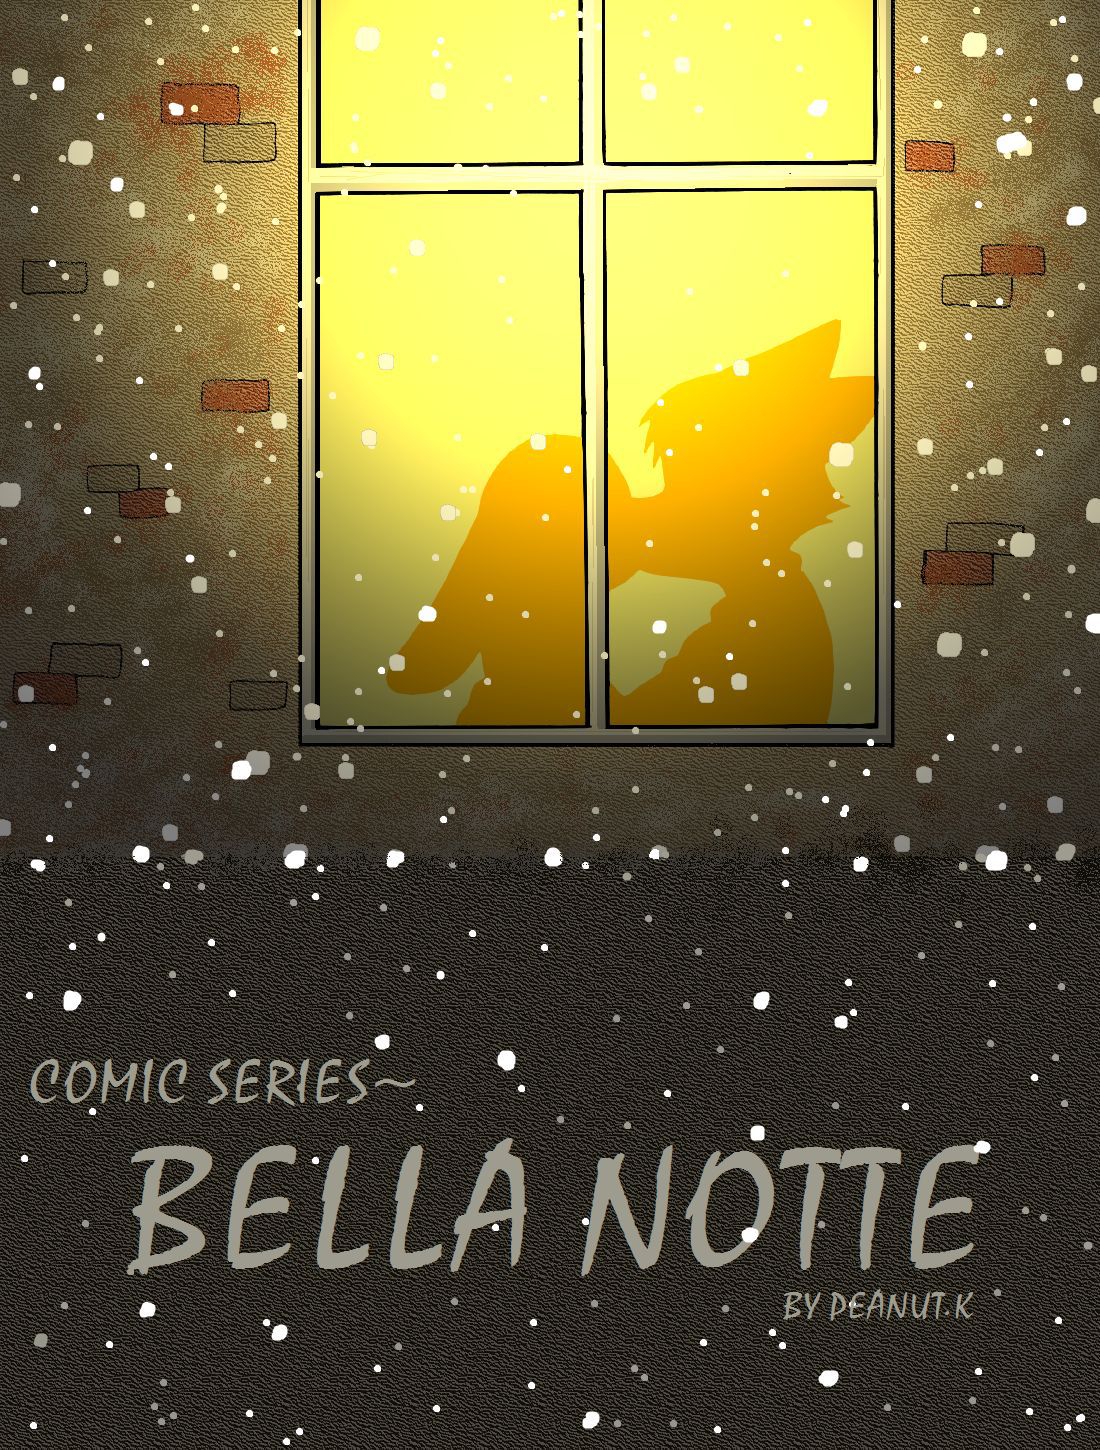 [Peanut-K] Bella Notte (Zootopia) (English) http://peanut-k.tumblr.com/ 1